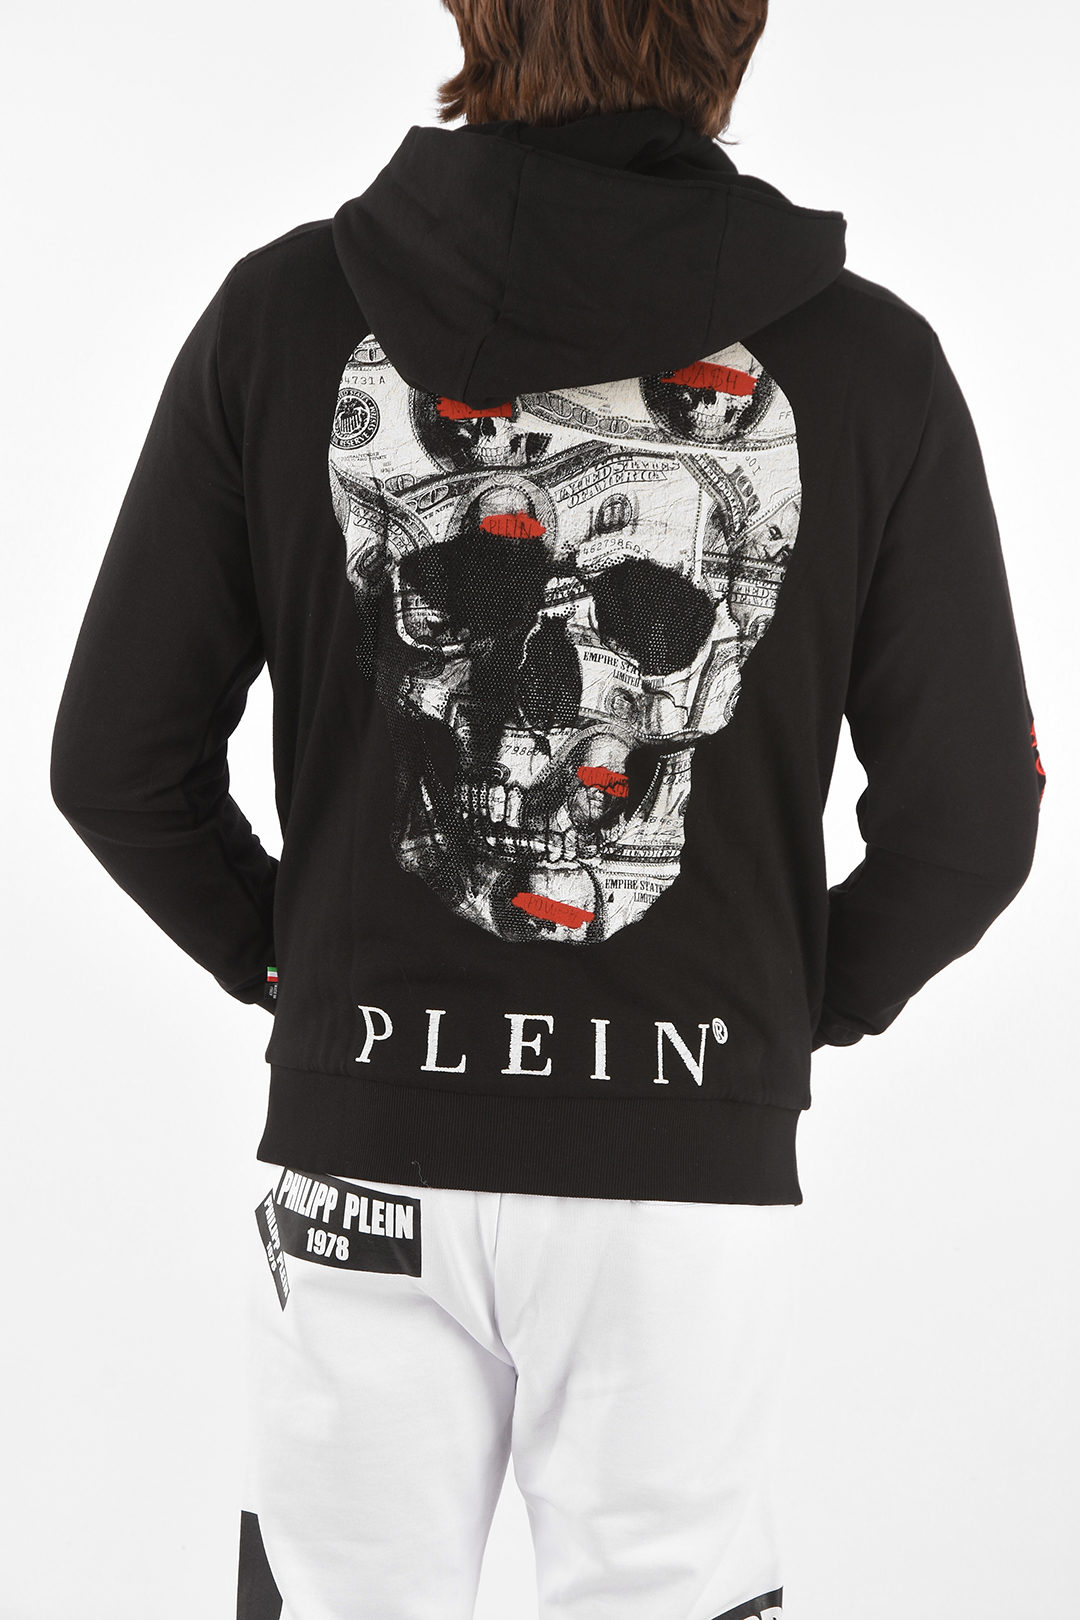 Philipp Plein Hooded DOLLAR Sweatshirt Print and Rhinestone men - Glamood Outlet